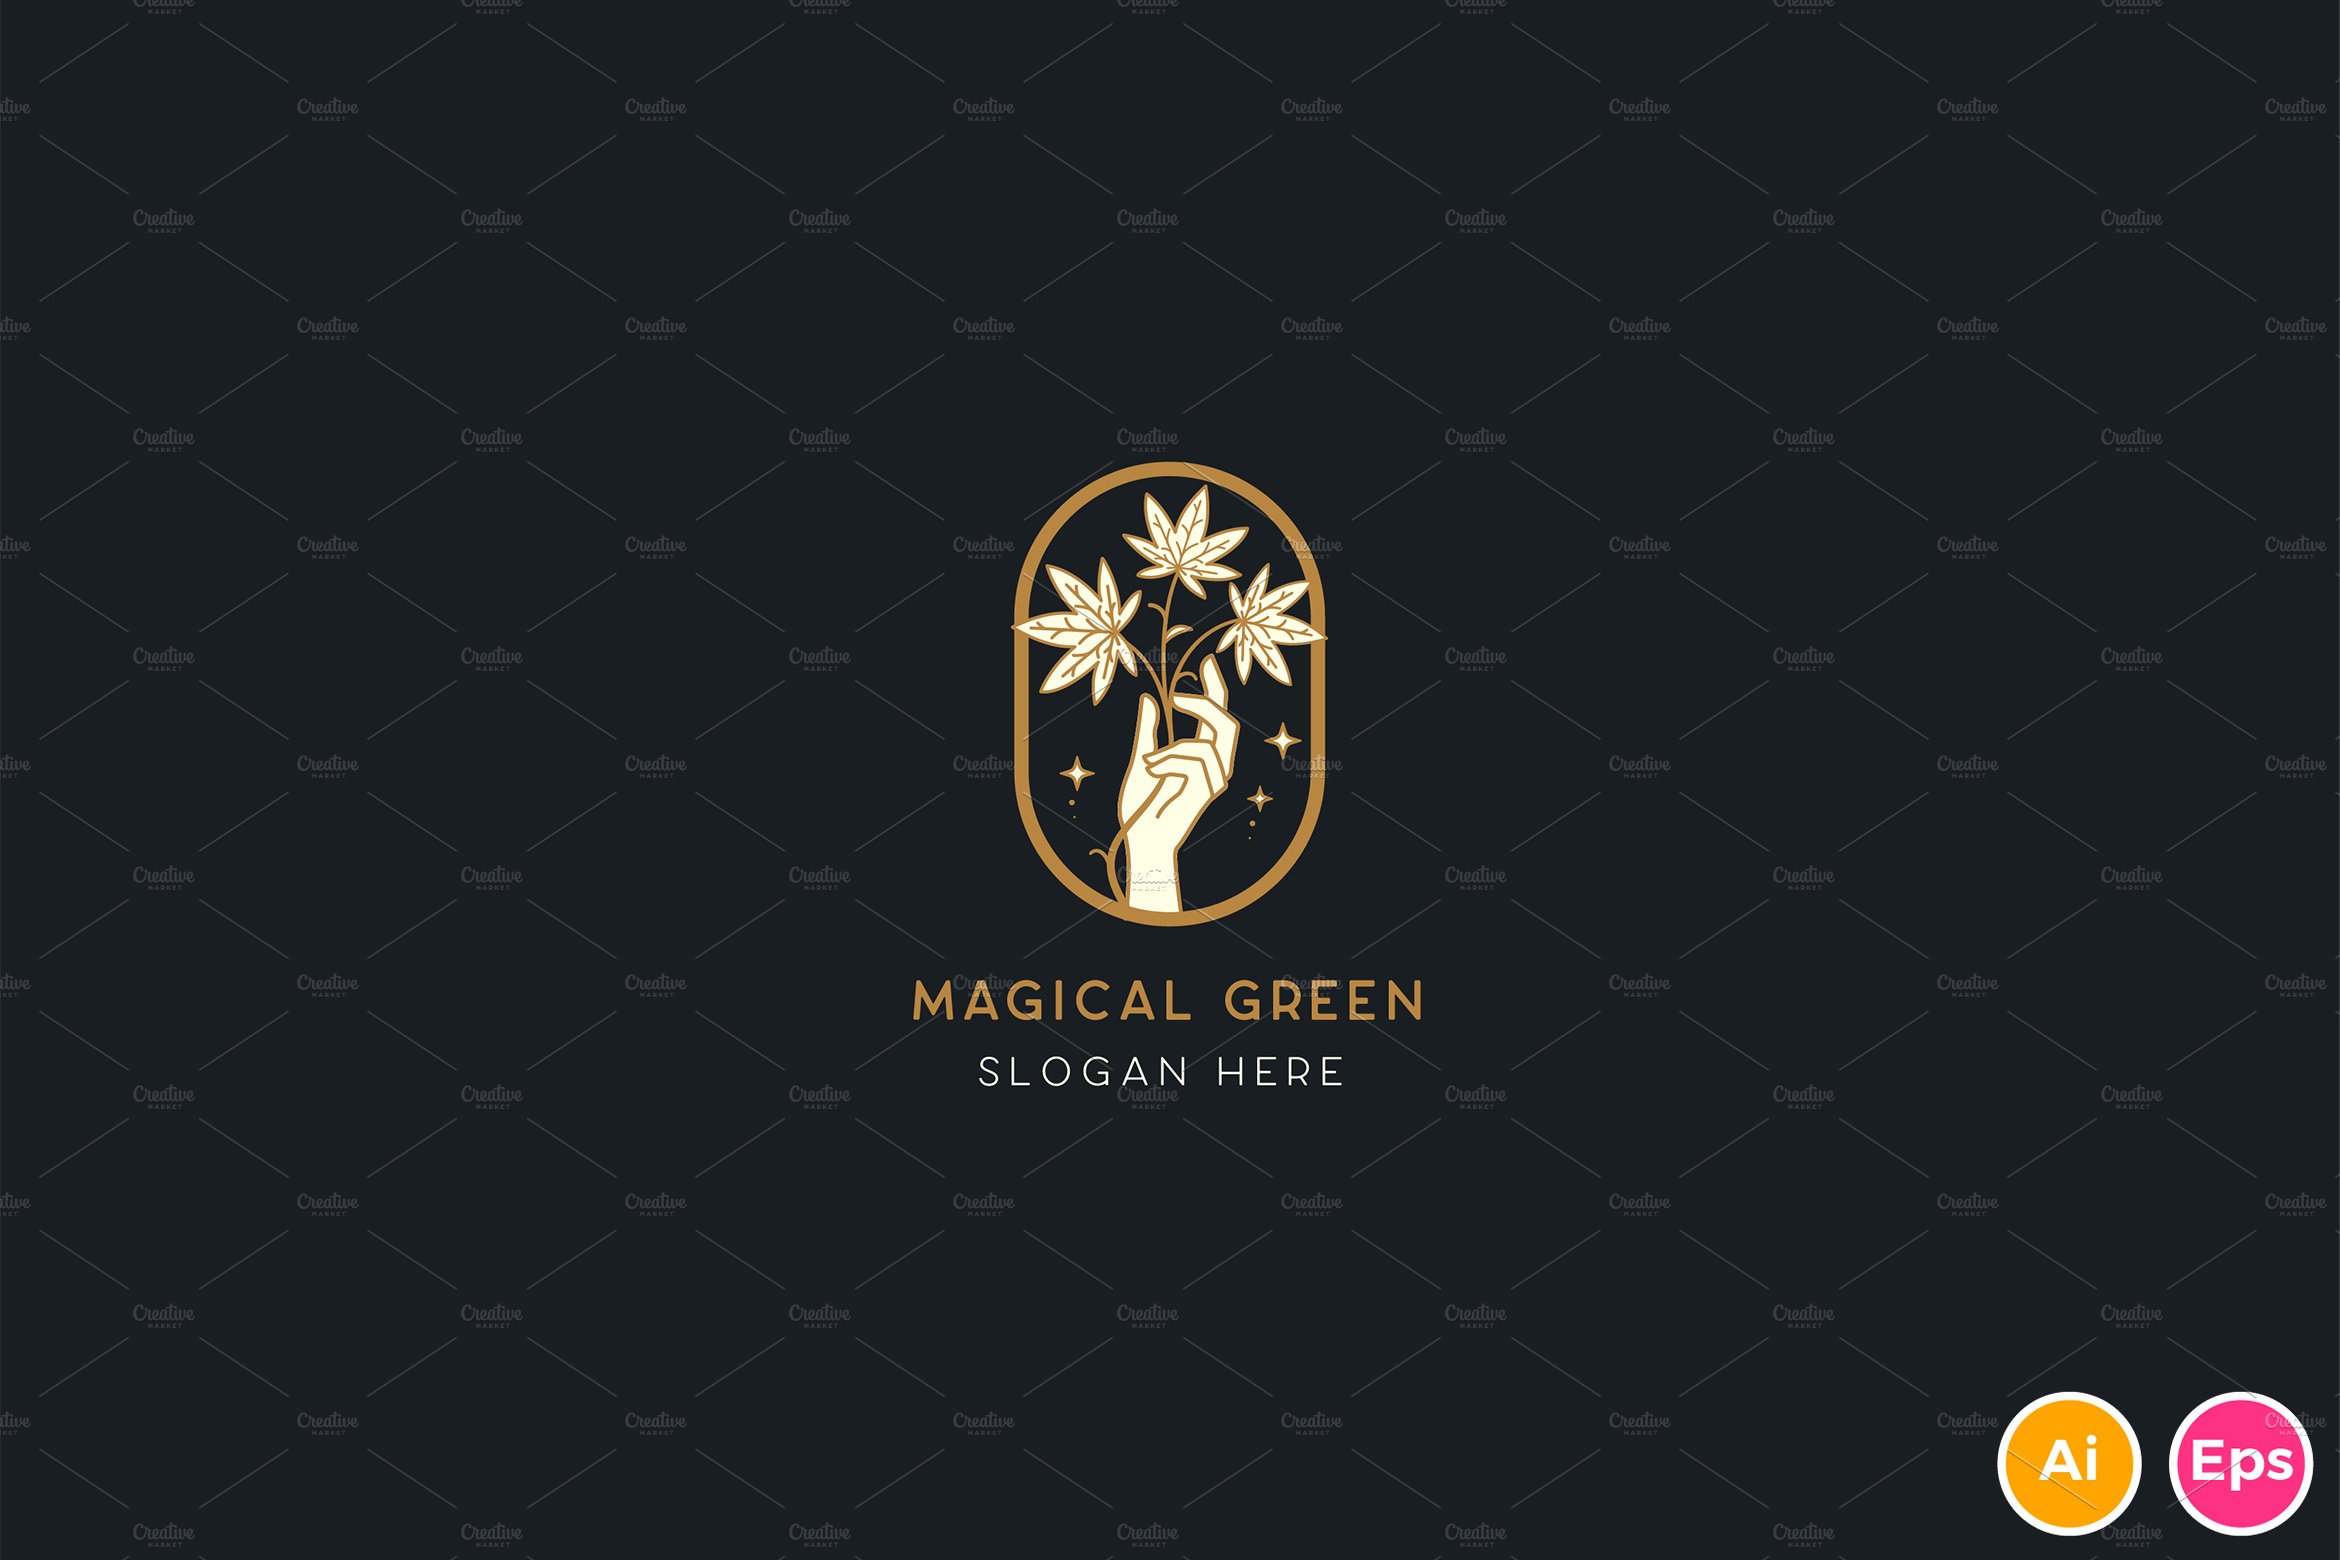 Magical Green Cannabis Logo Template cover image.